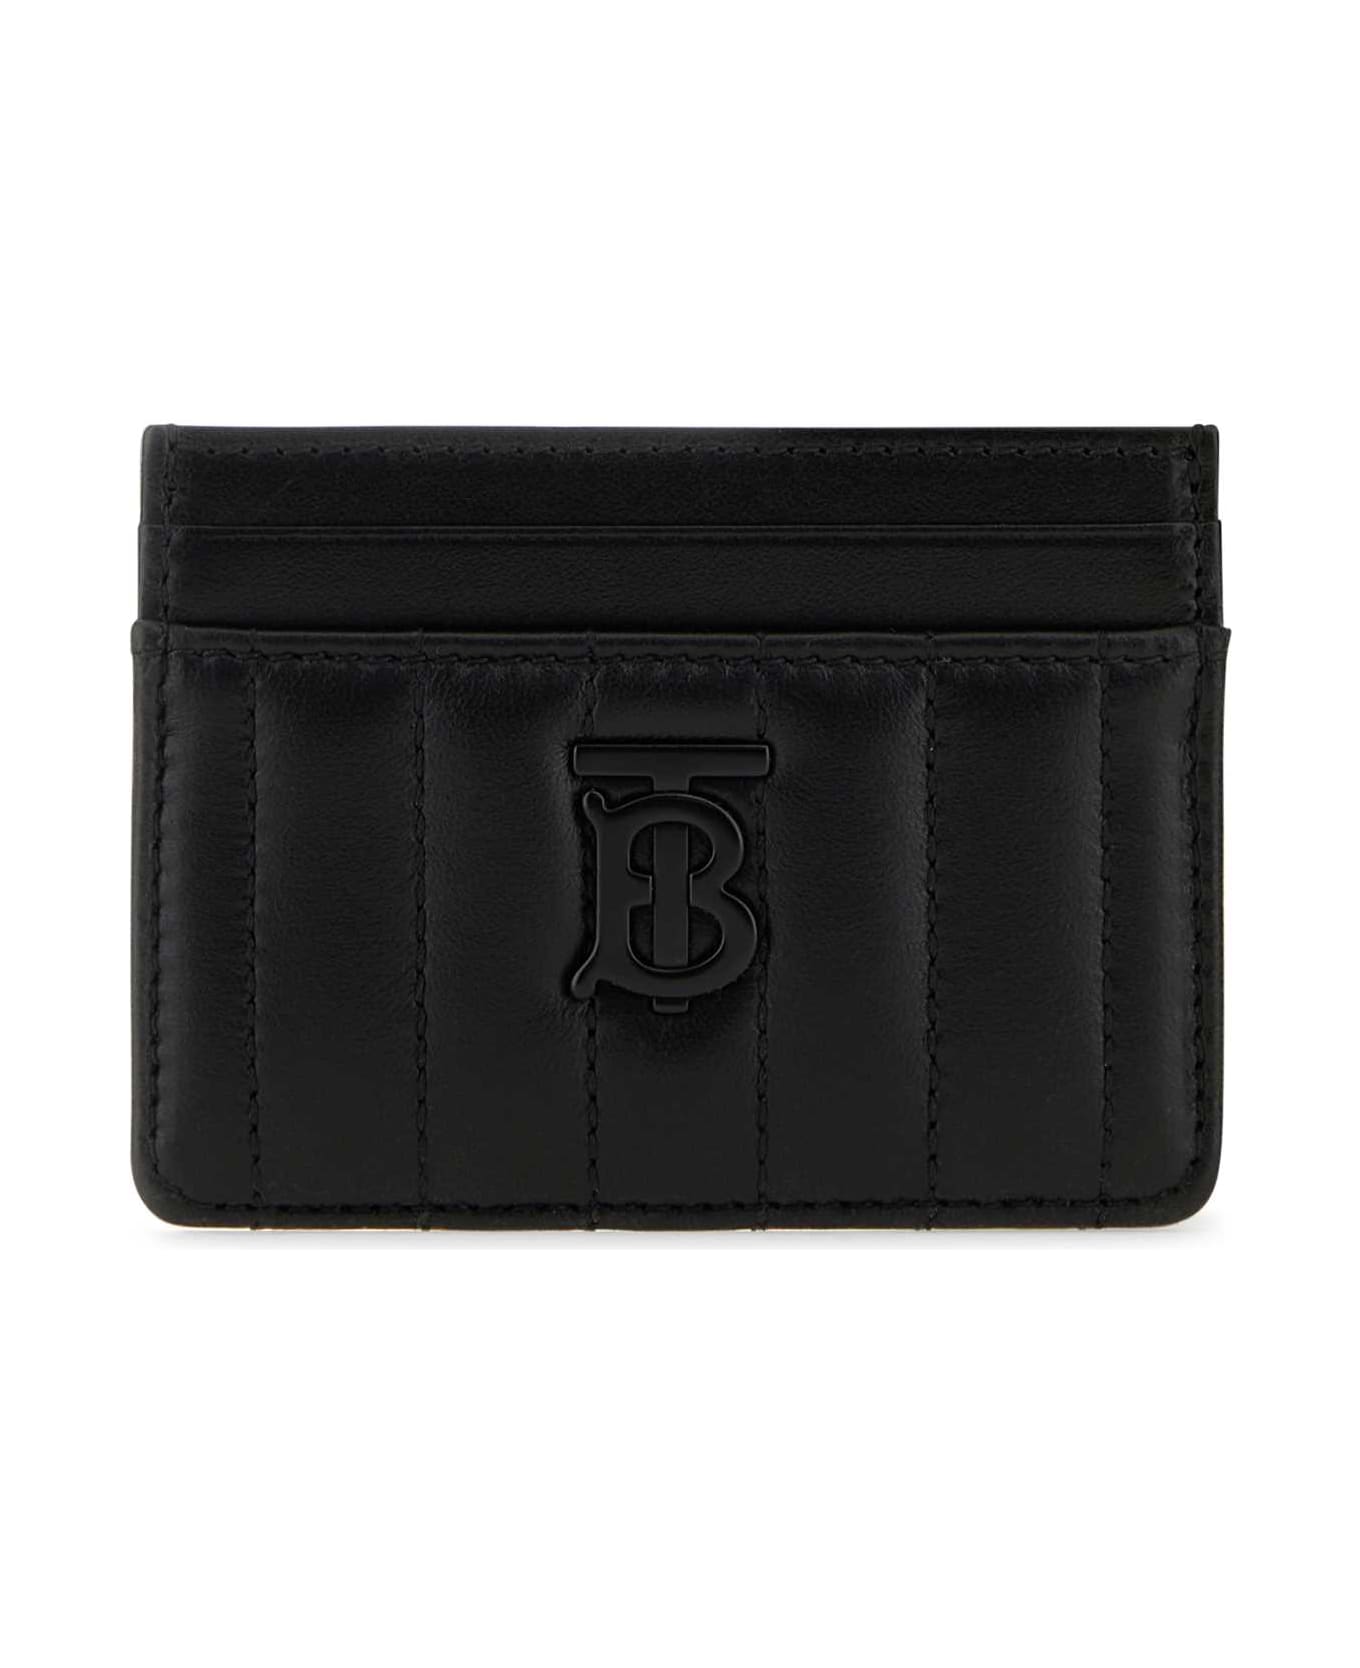 Burberry Black Leather Card Holder - BLACKBLACK